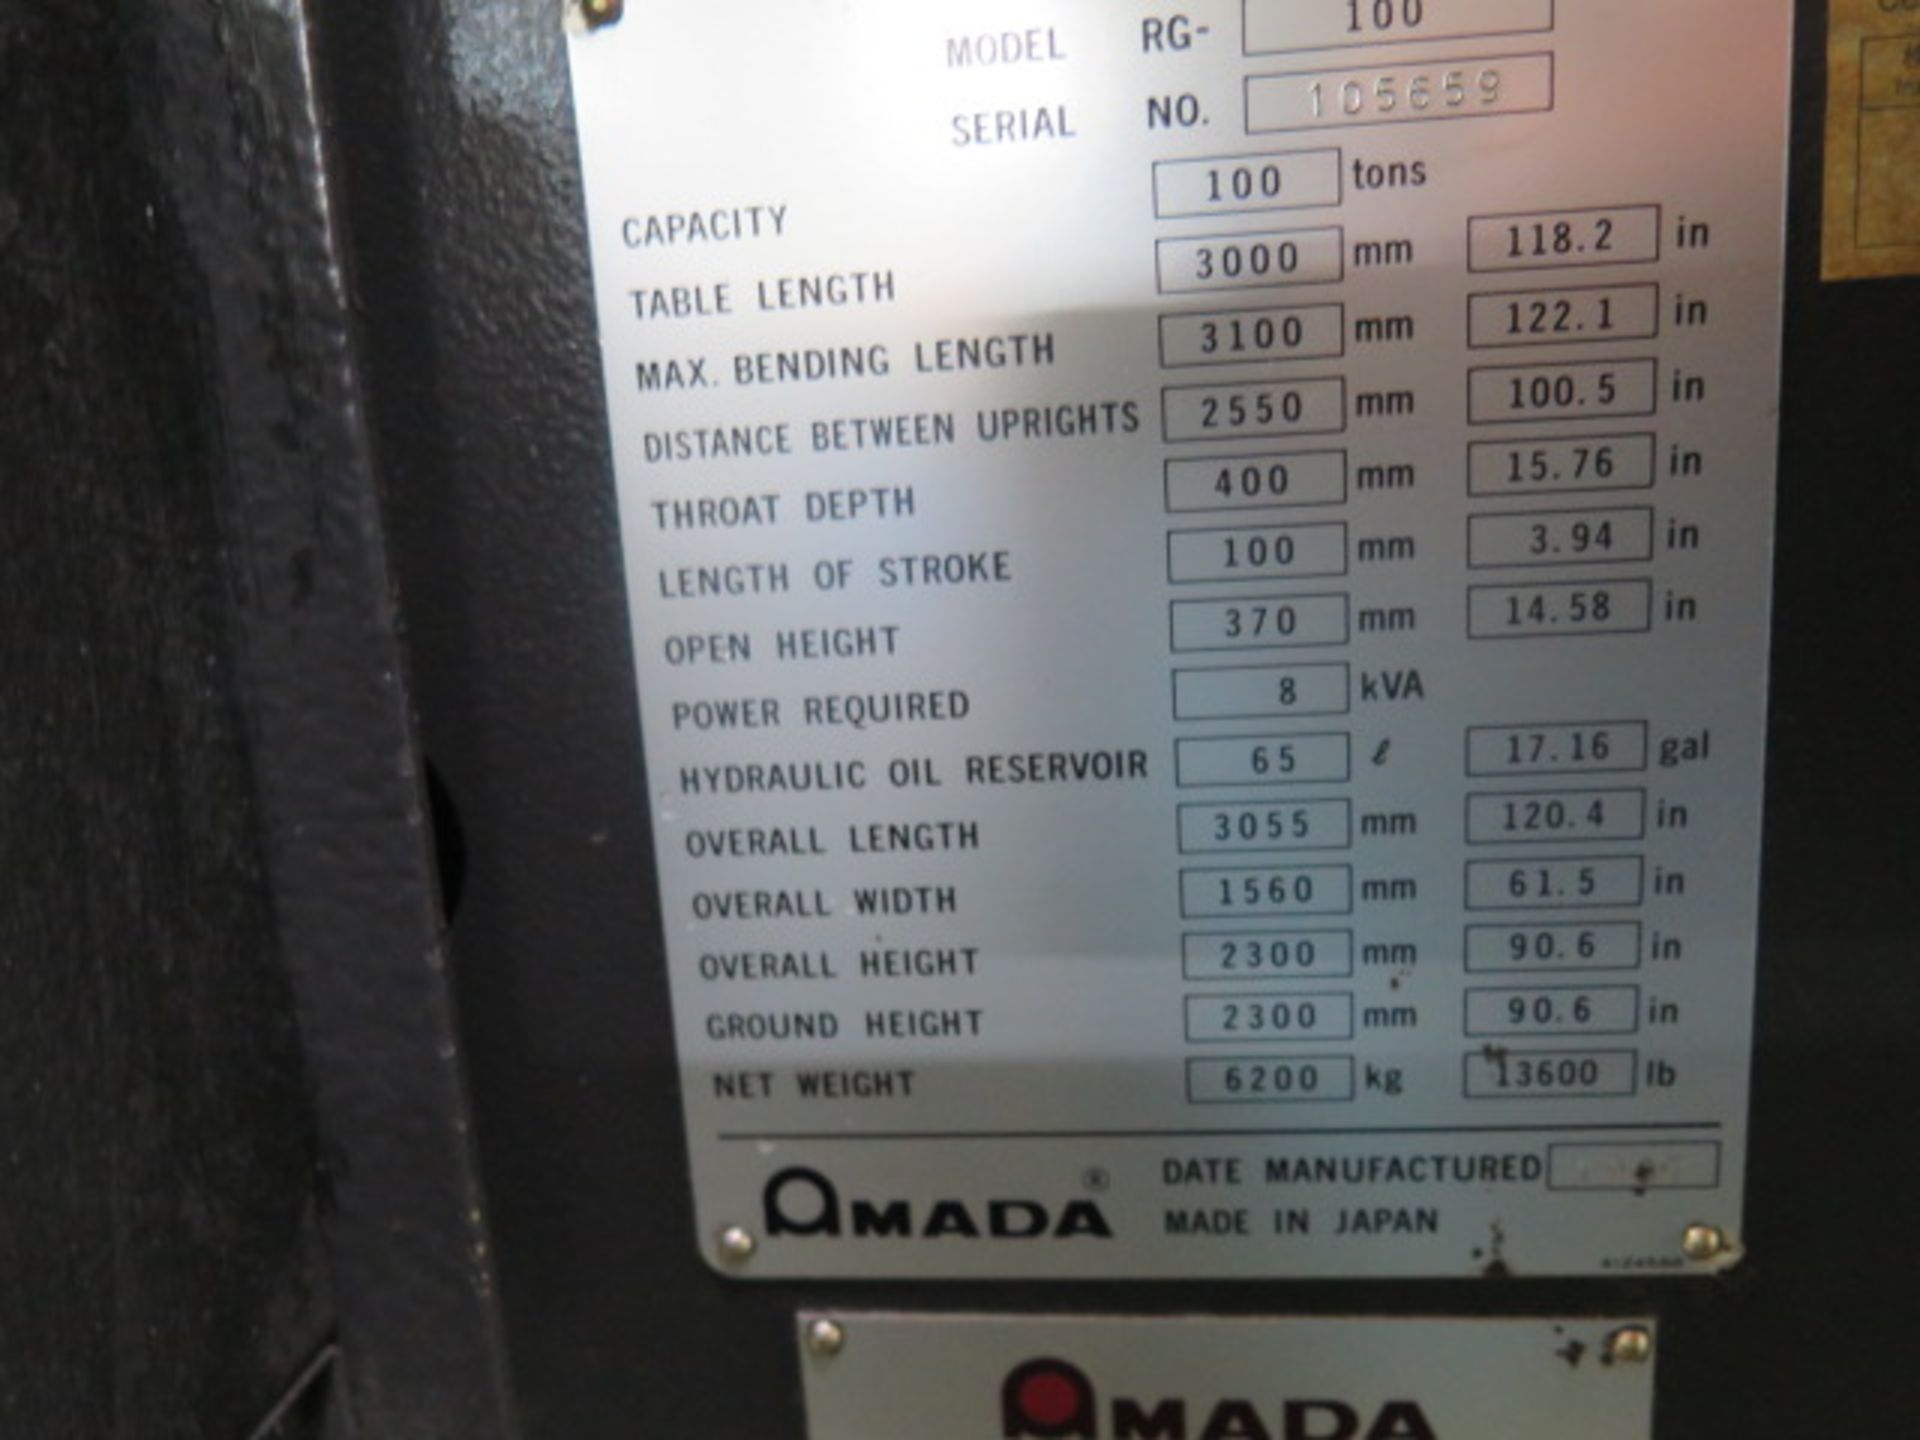 1997 Amada RG-100 100 Ton 10’ CNC Press Brake s/n 105659 w/ Amada NC9-EXII Controls, SOLD AS IS - Image 15 of 16